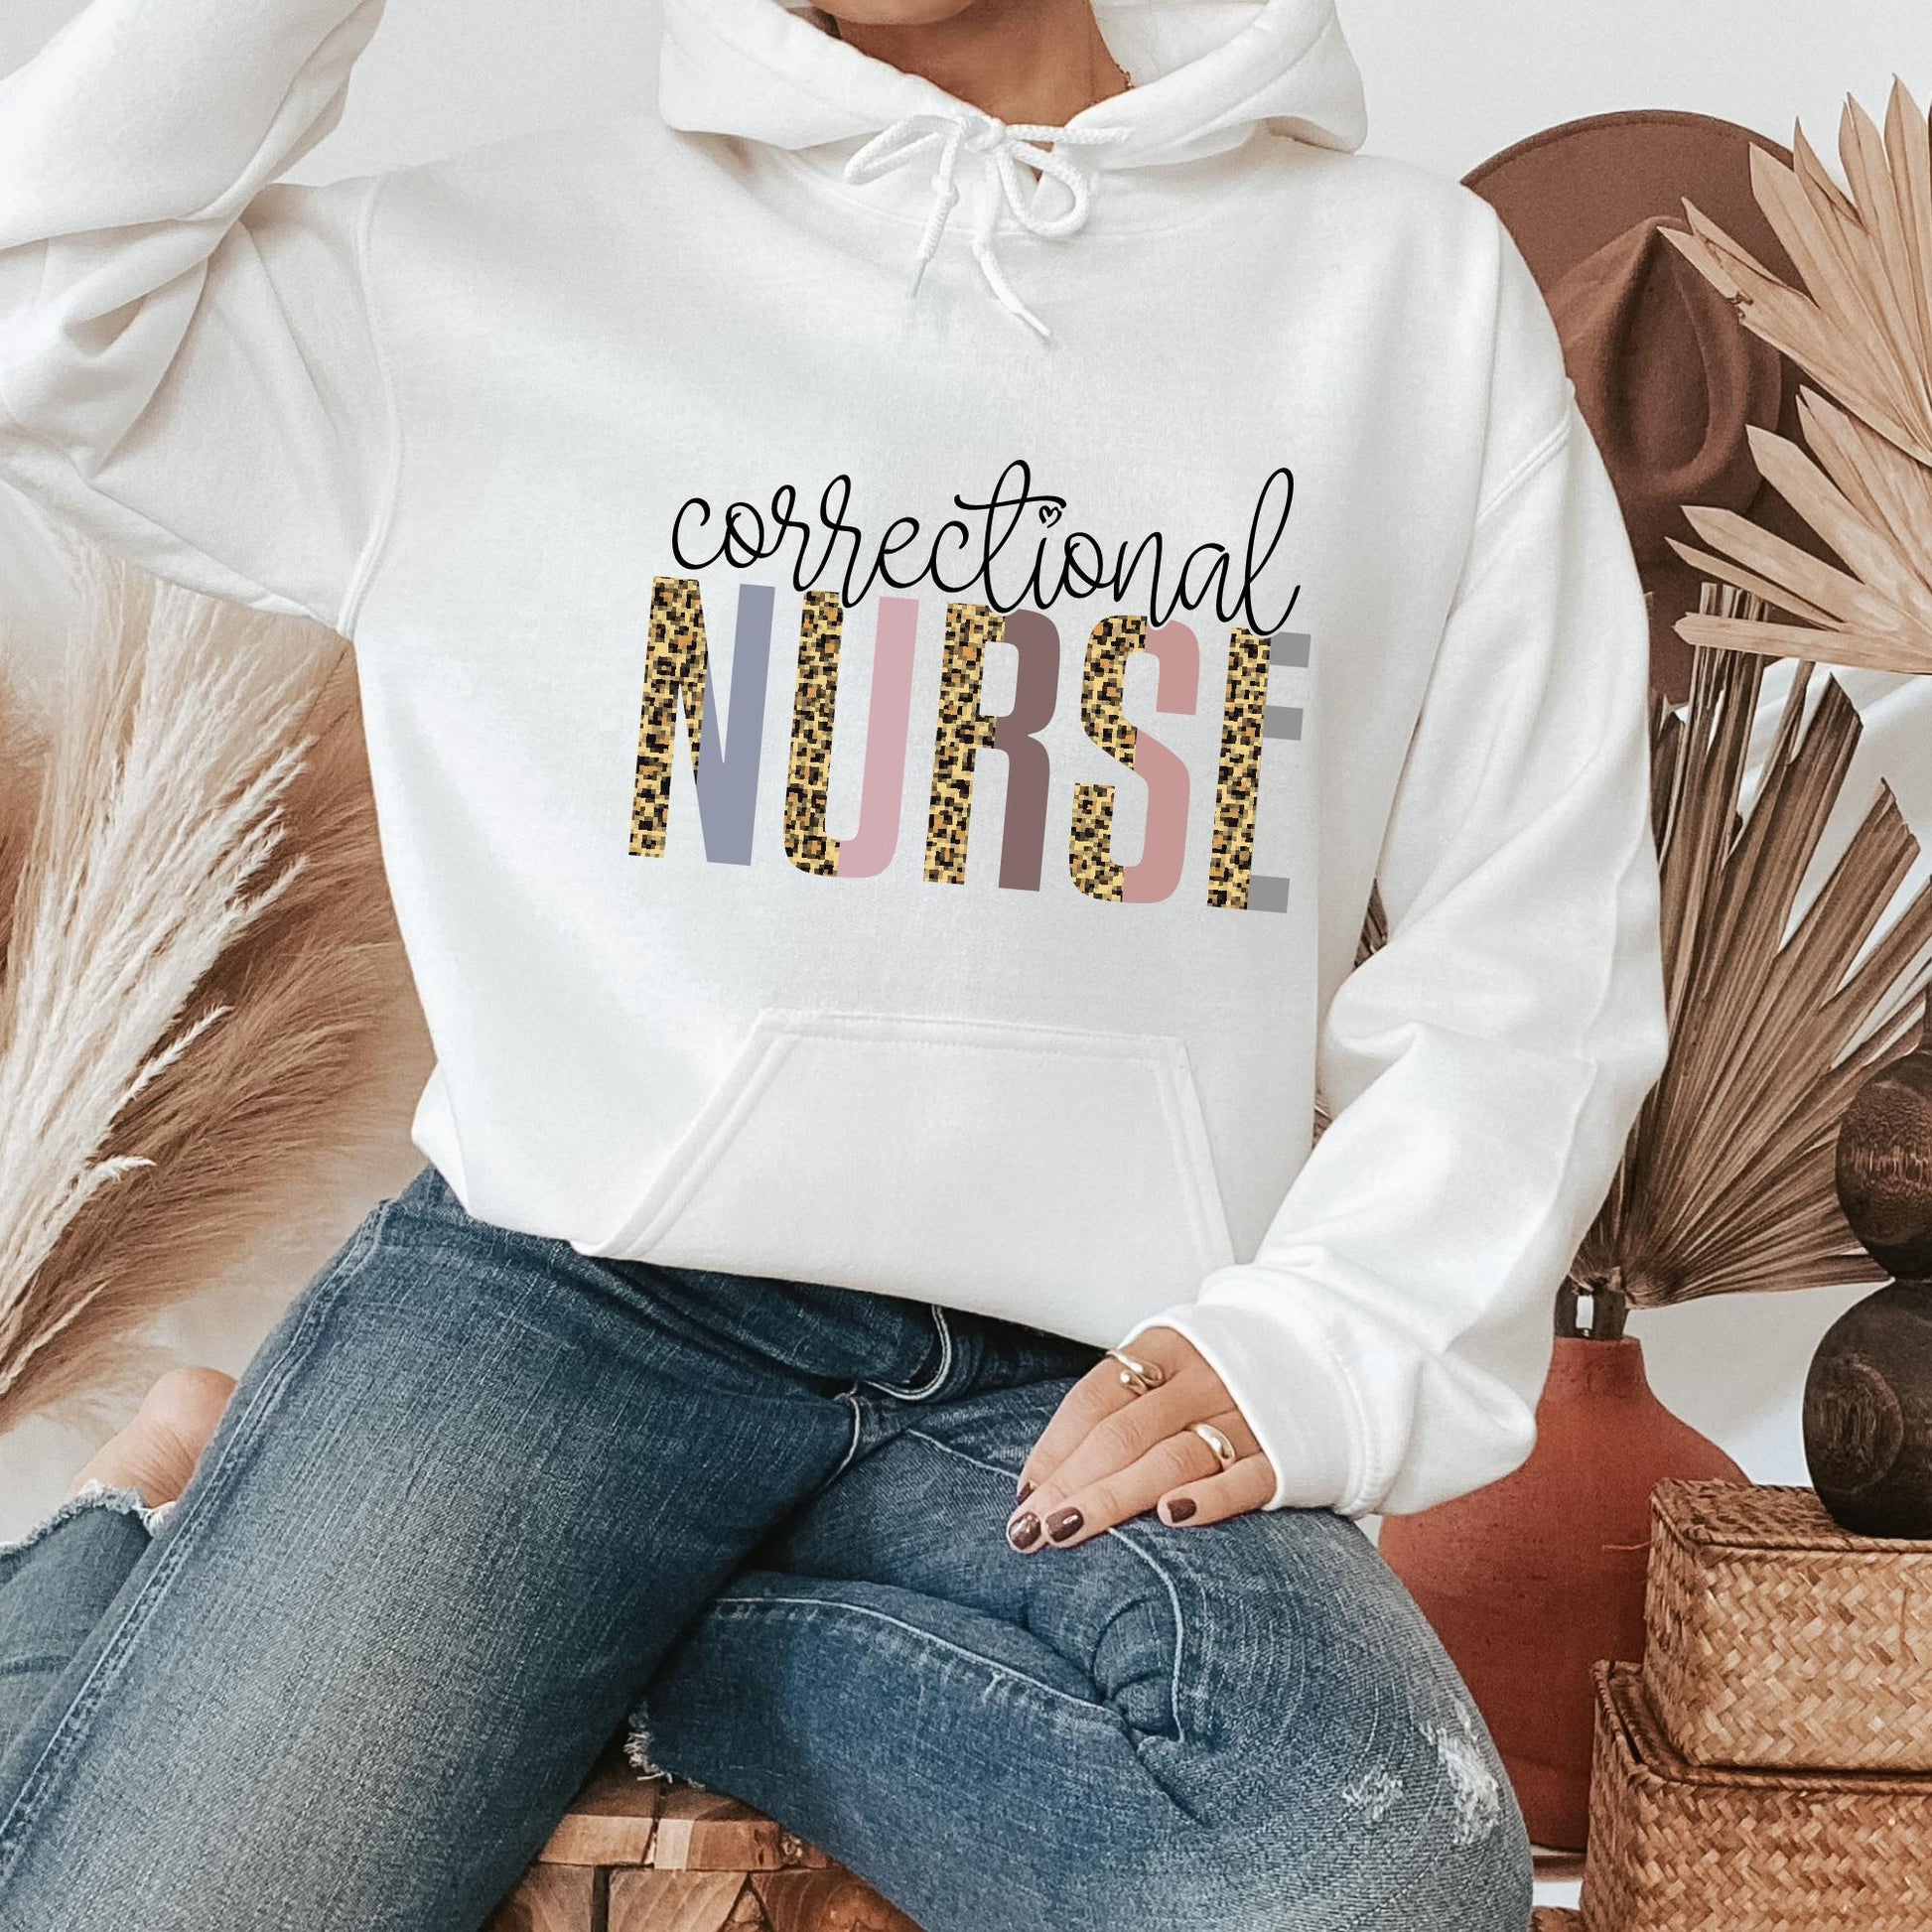 Correctional Nurse Shirt